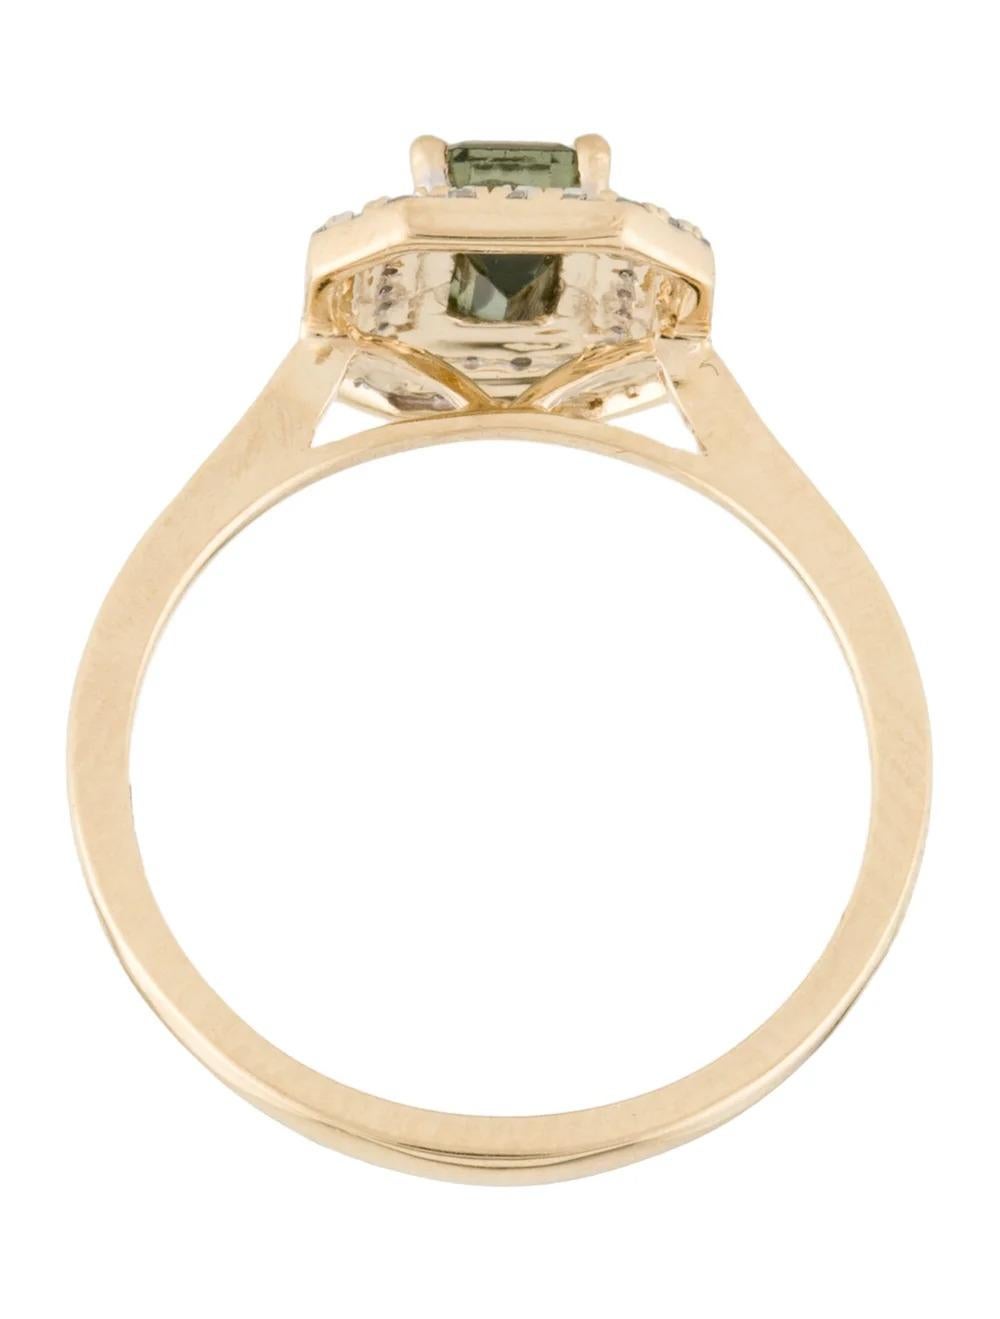 Women's Vintage 14K Tourmaline Diamond Cocktail Ring Size 6.25 - Fine Statement Jewelry For Sale